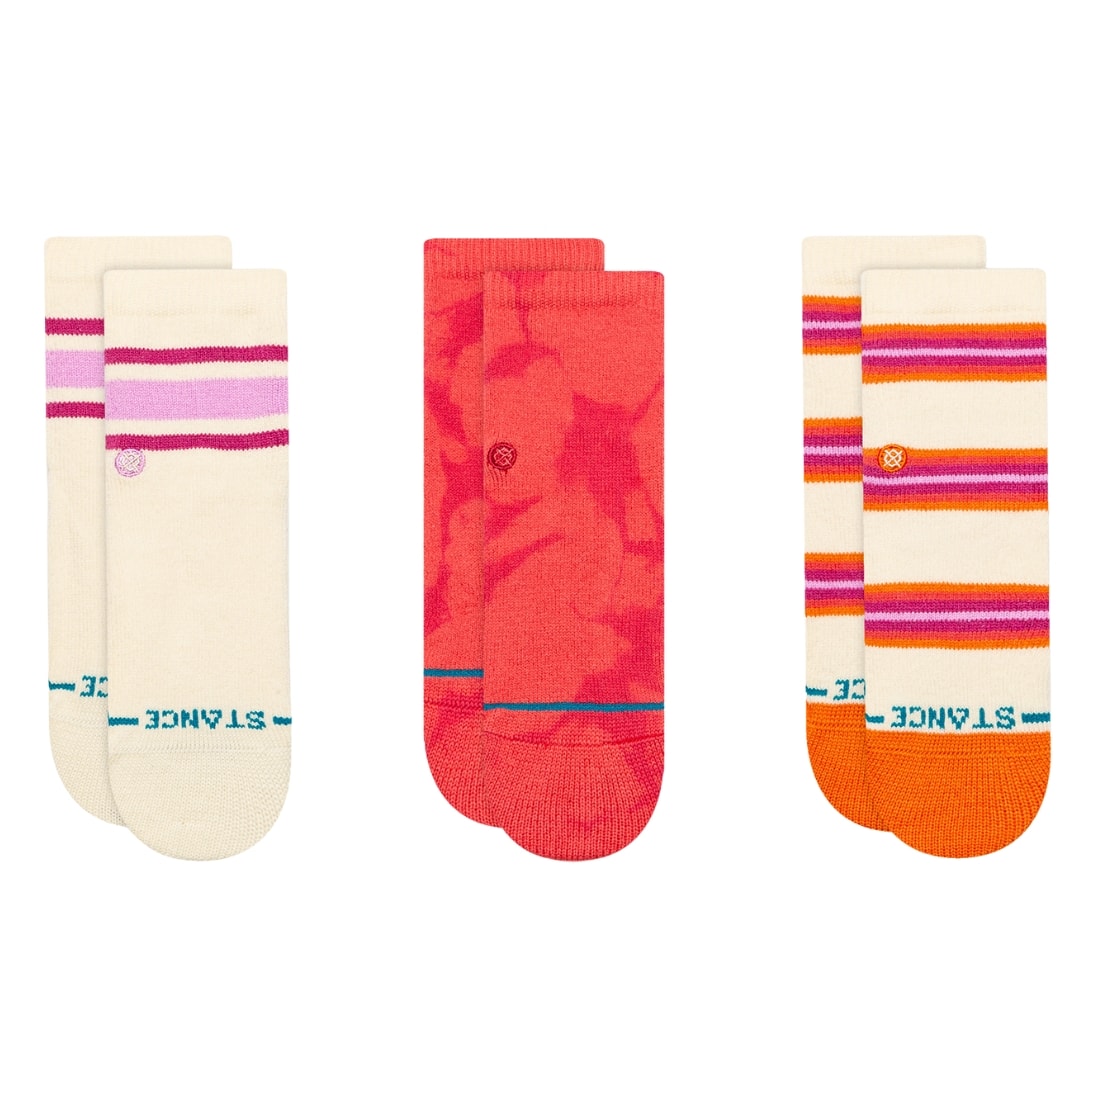 Stance Dye Namic Baby/Toddler 3 Pack Socks - Pink - Kids Crew Length Socks by Stance